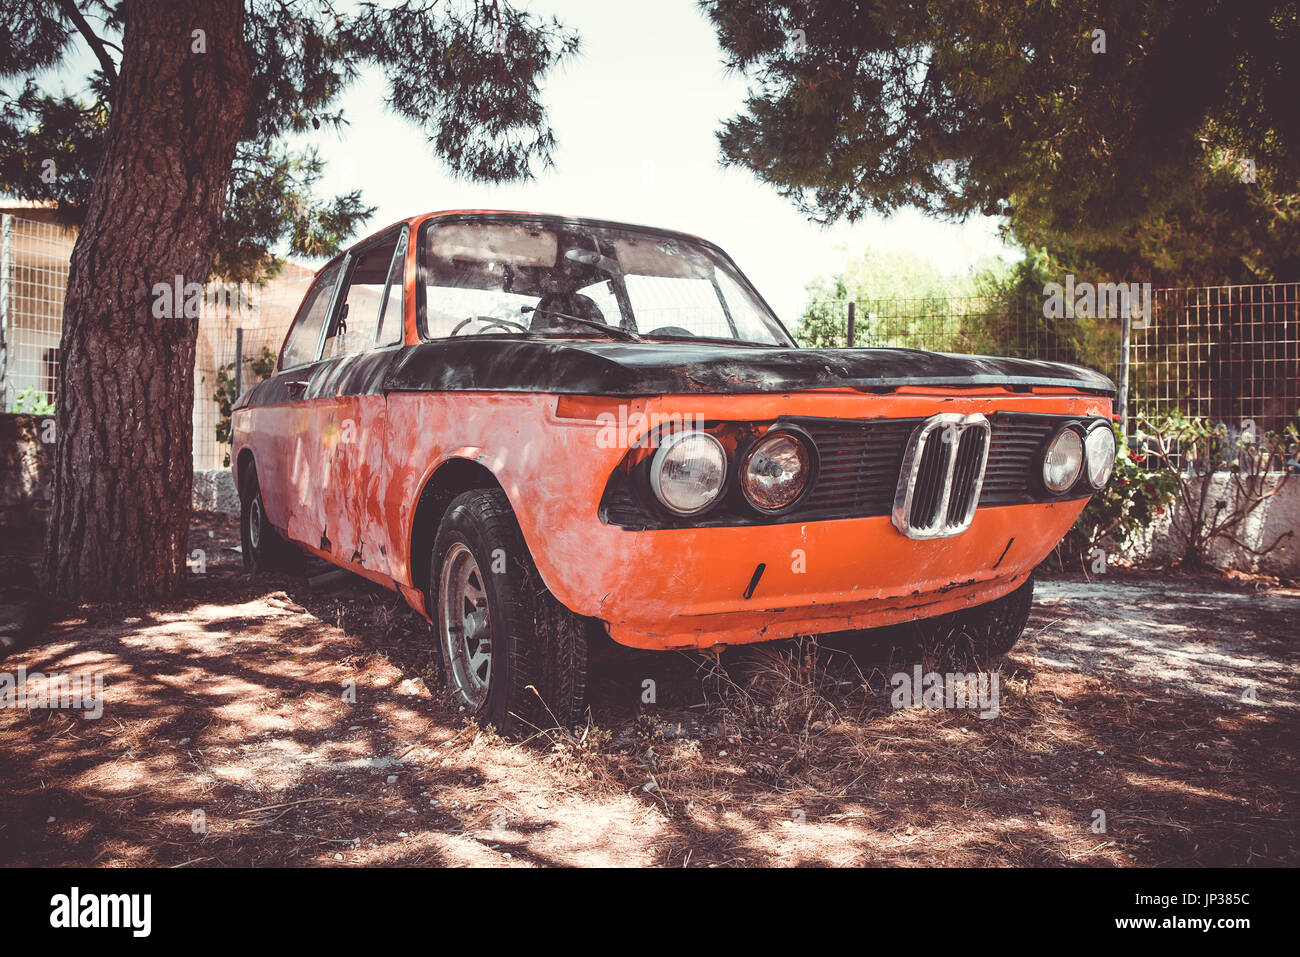 Old abandoned vintage car rusting under the tree. Vintage filter Stock Photo